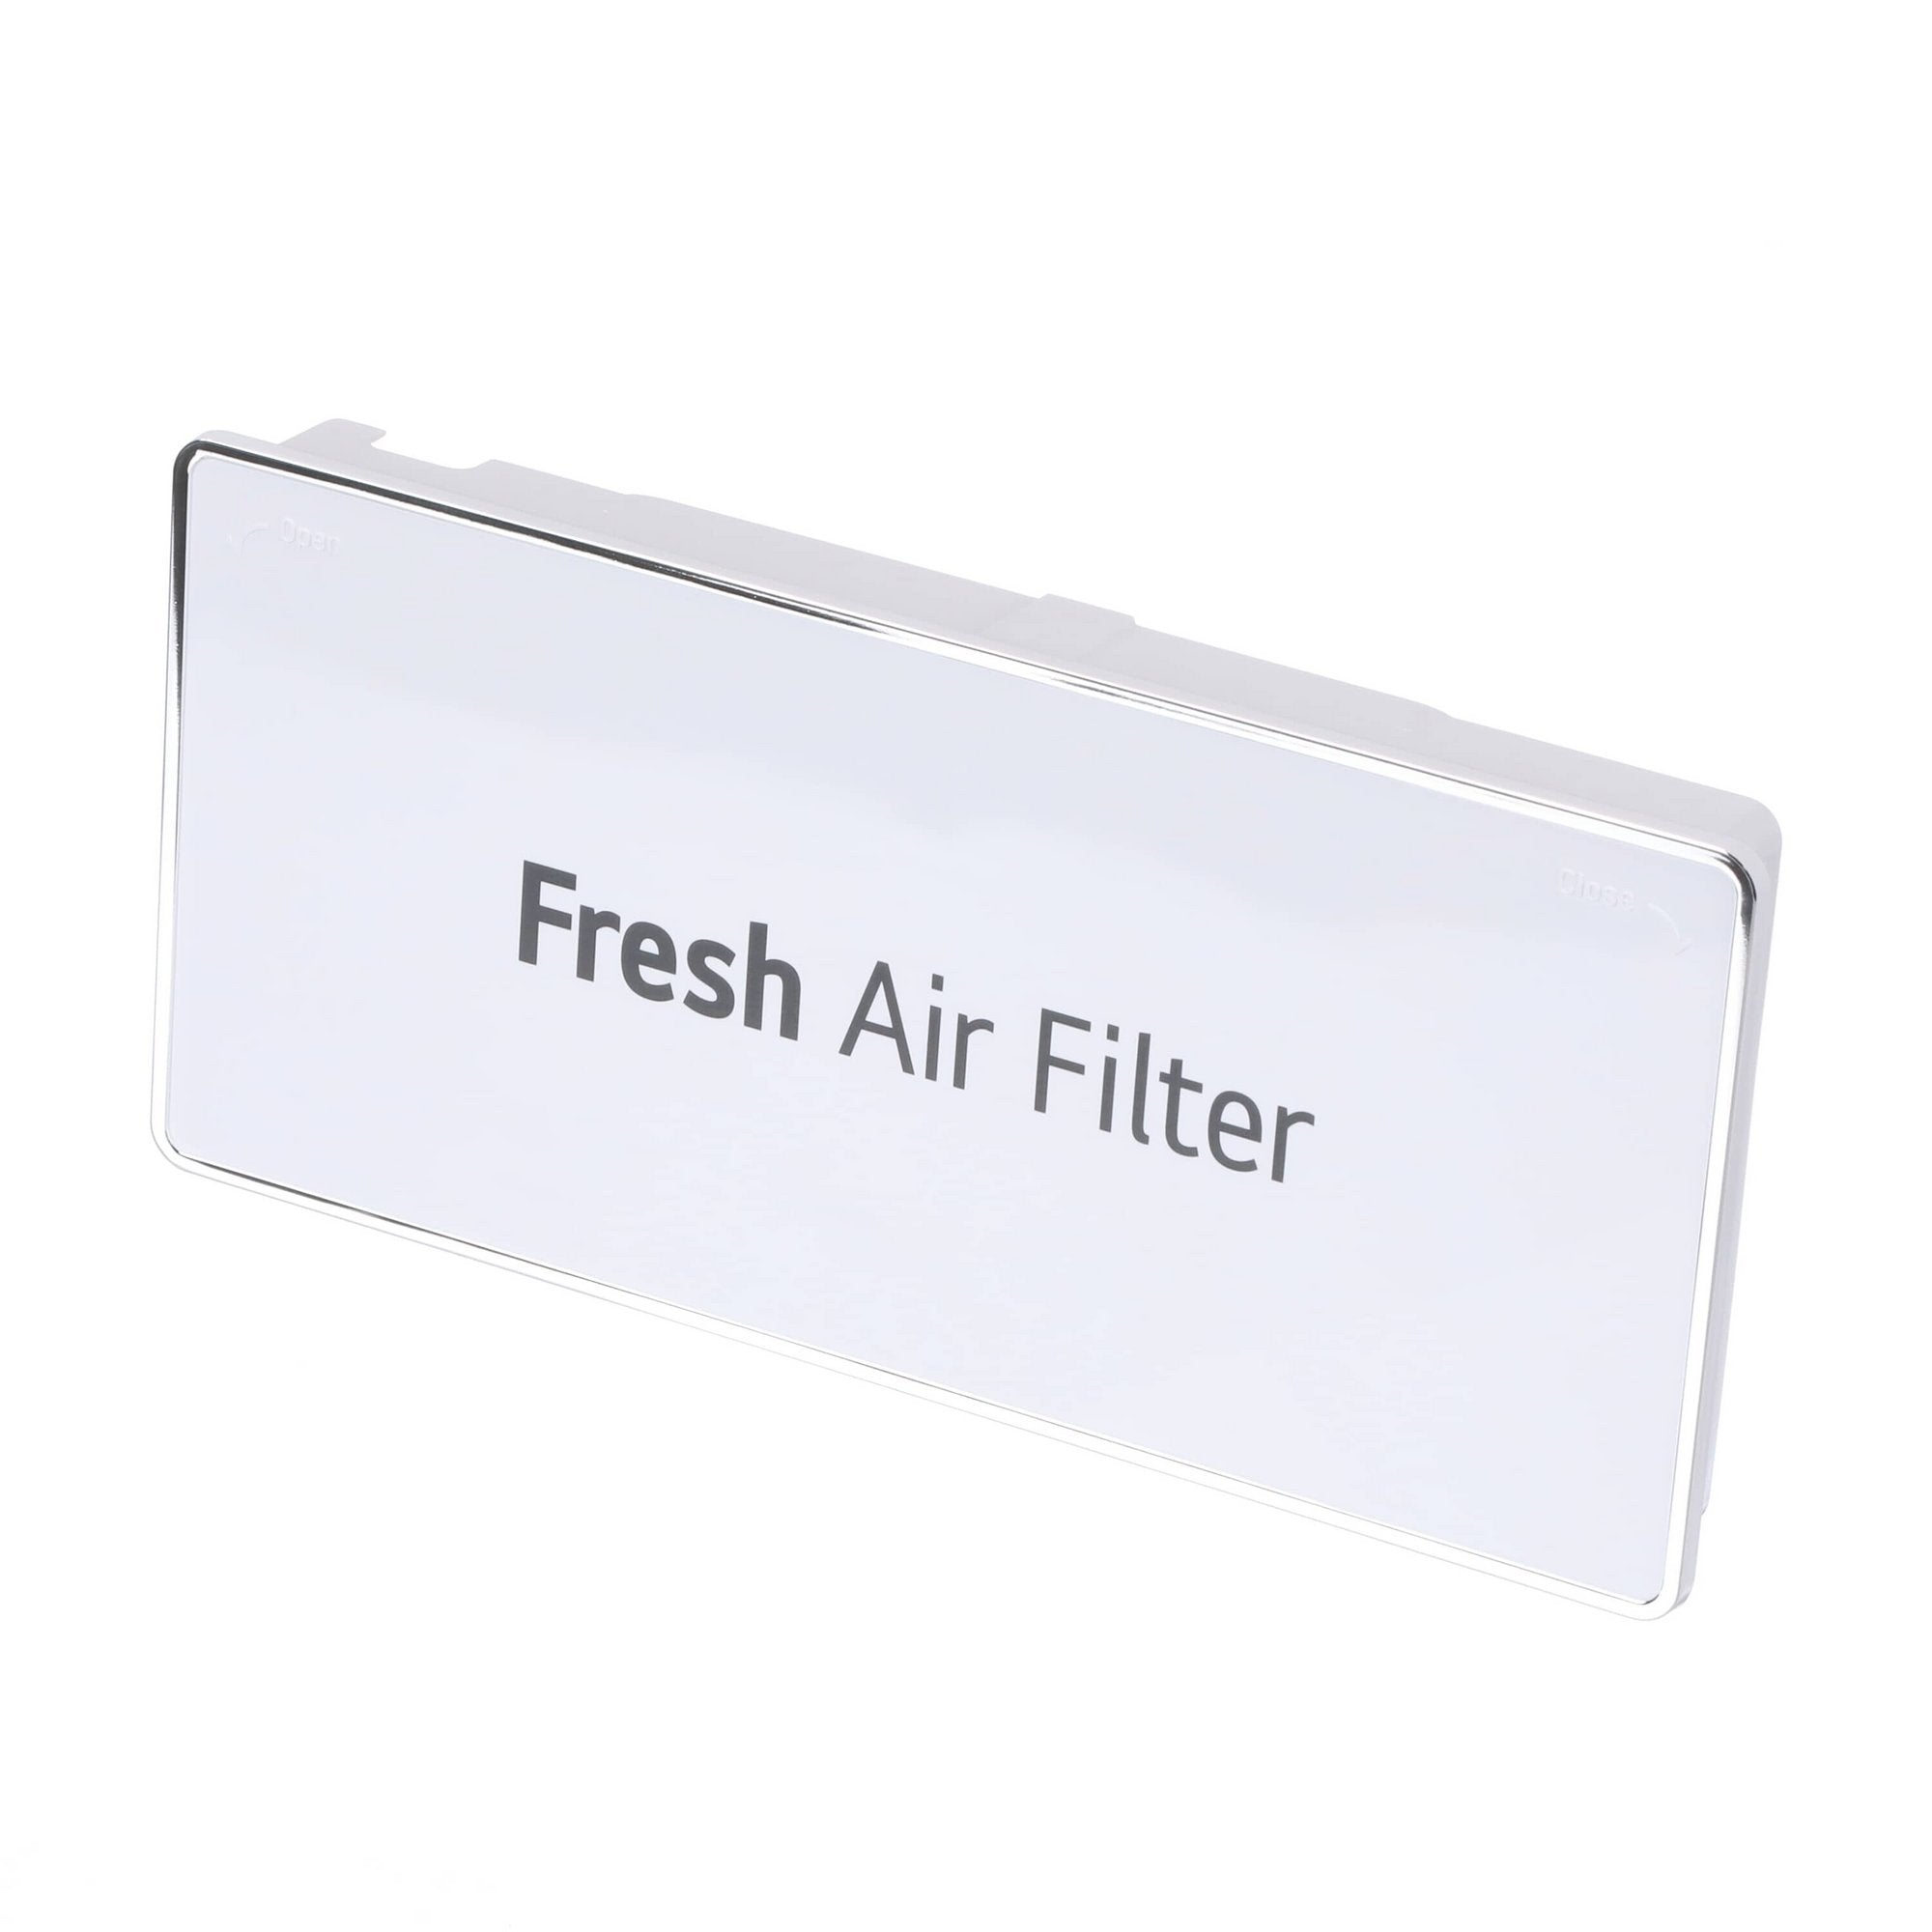 MCR66849208 - LG Refrigerator Air Filter Cover New